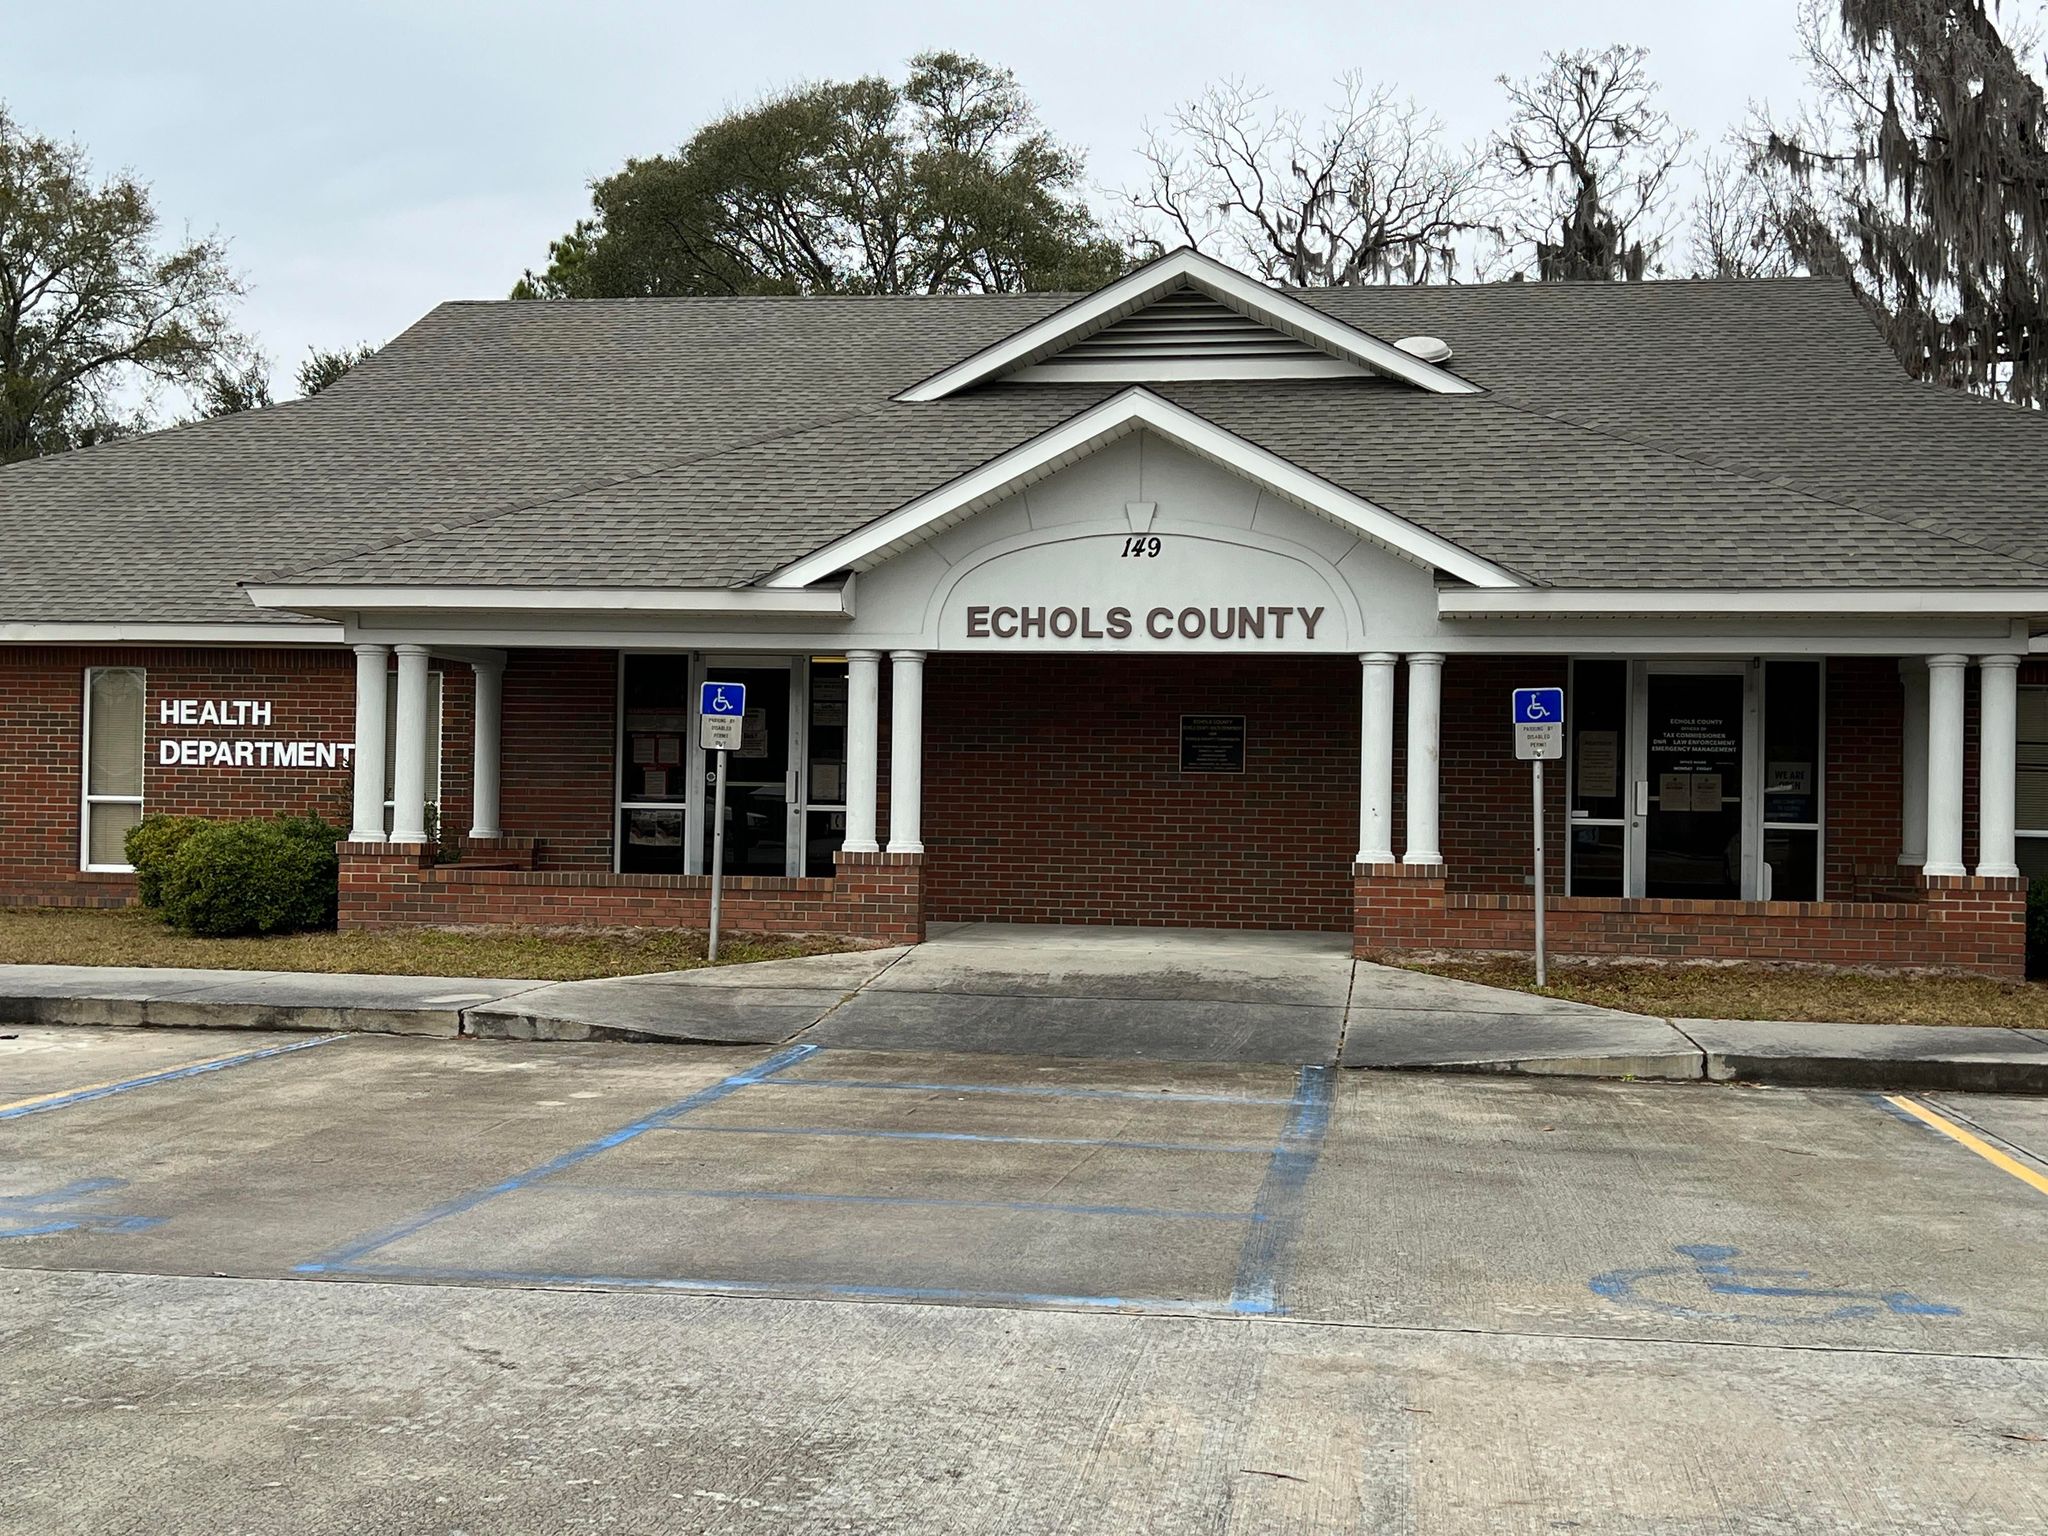 Echols County Health Department